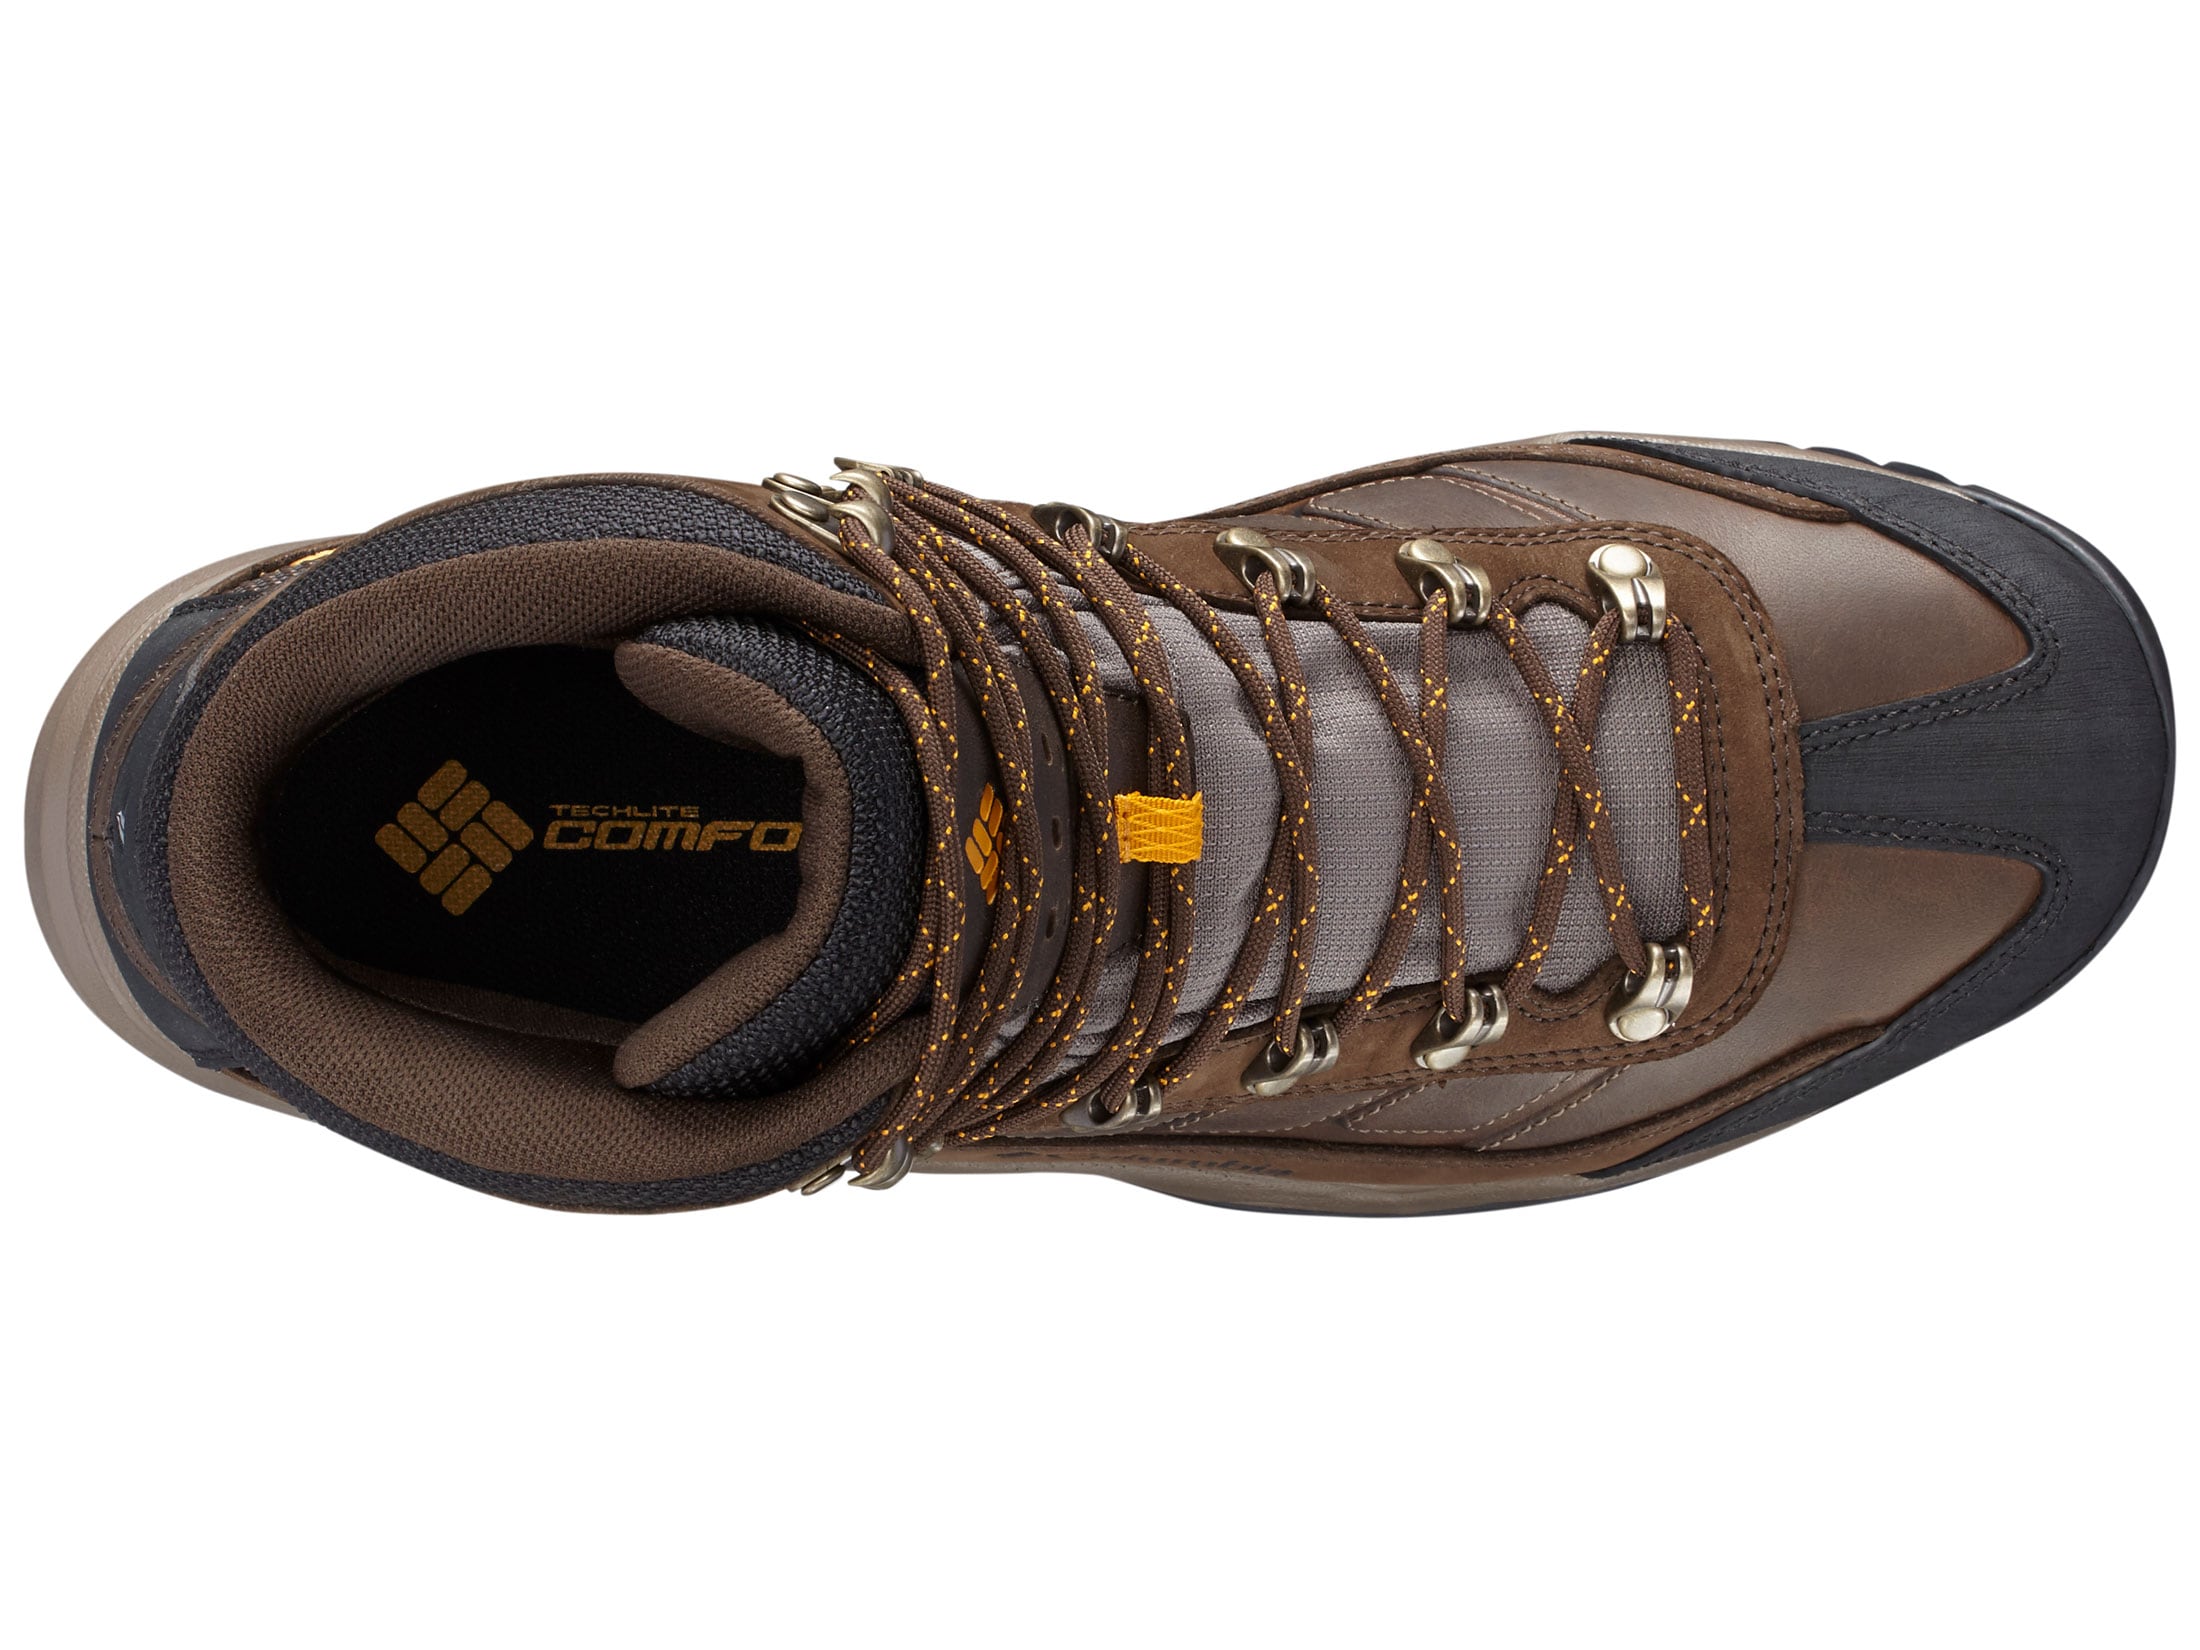 Columbia Daska Pass III Titanium Outdry 6" Hiking Boots Leather Men's 